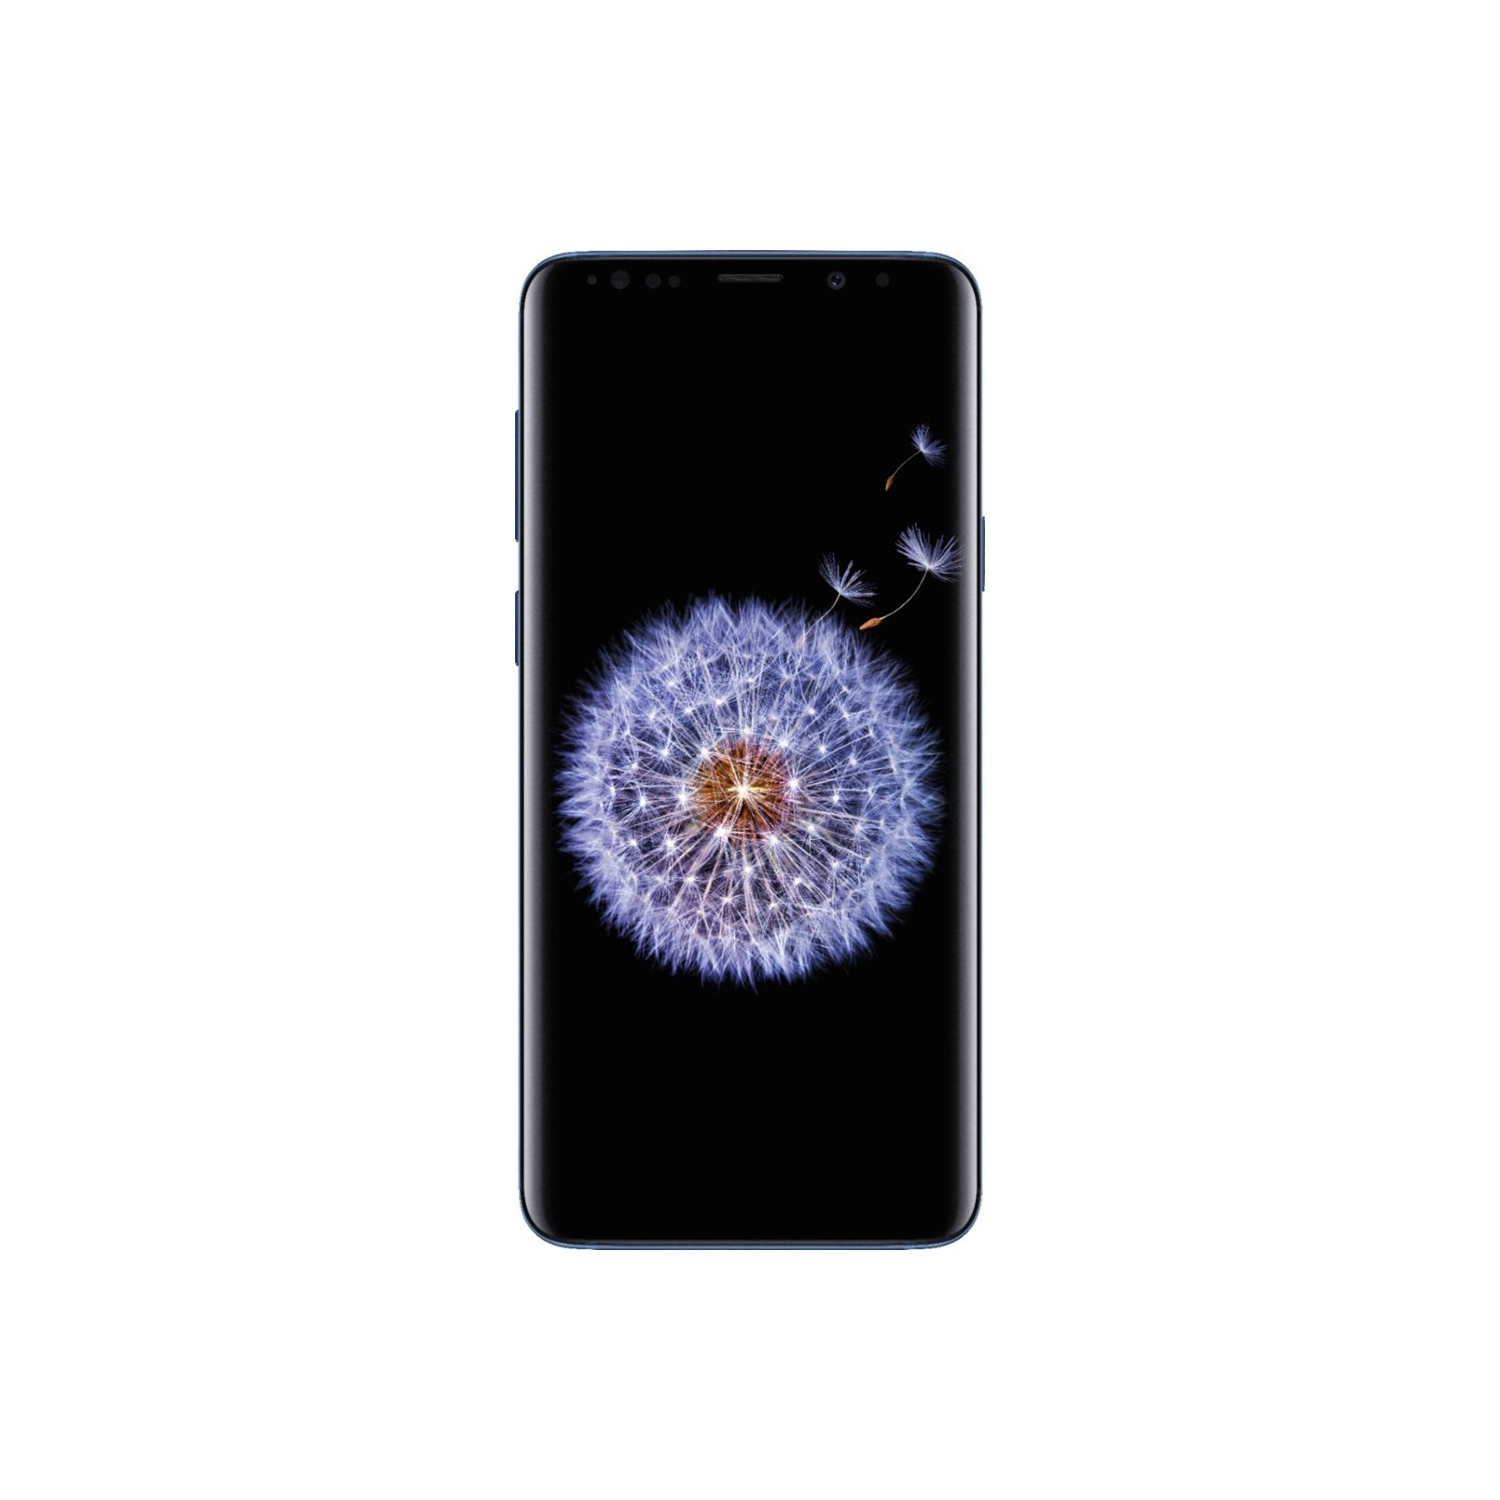 Refurbished (Excellent) - Samsung Galaxy S9+ 64GB Smartphone - Coral Blue - Unlocked - Certified Refurbished